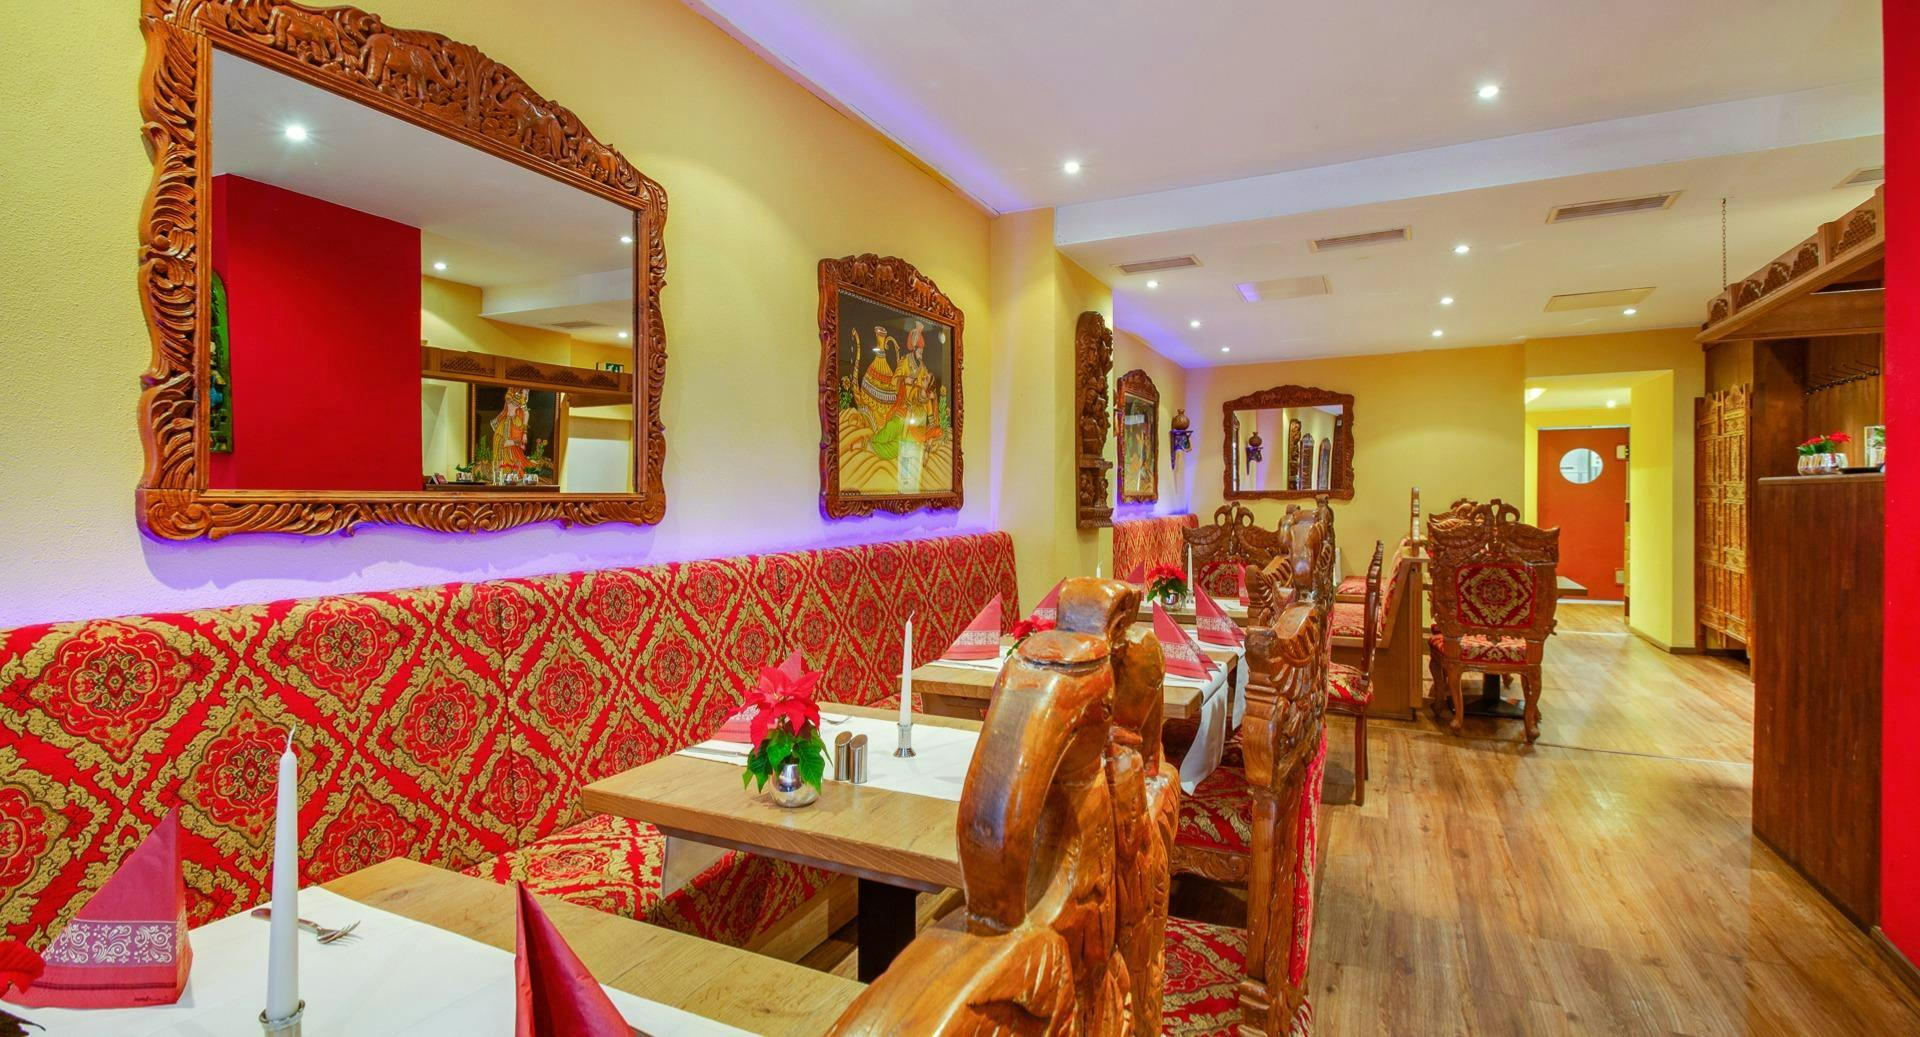 Fotos von Restaurant Indian Tandoori in Altstadt, Mainz